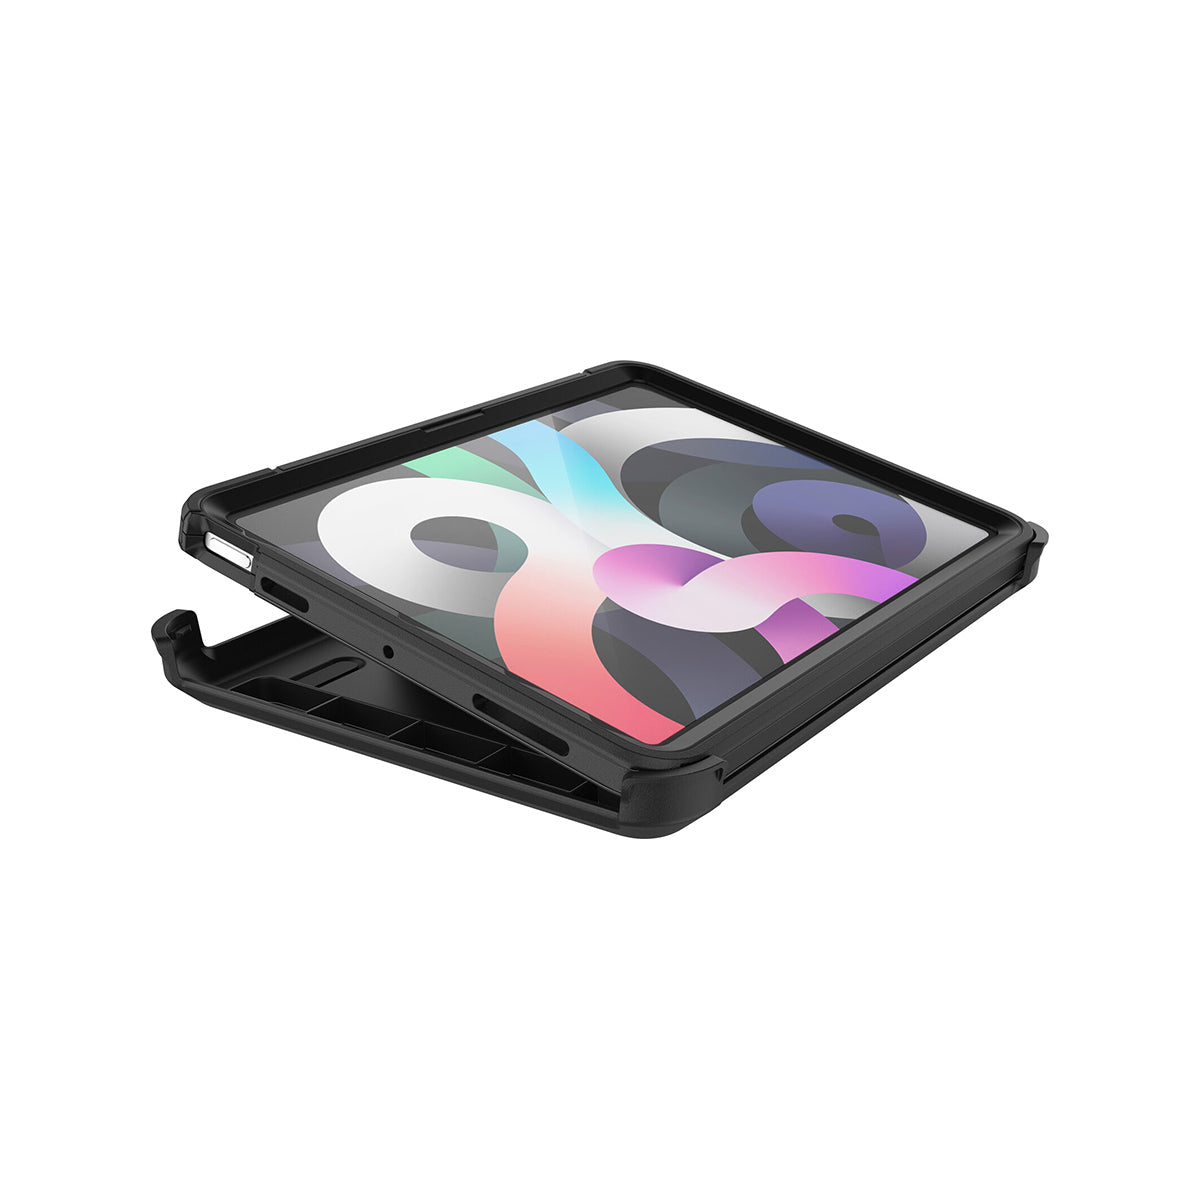 Otterbox Defender Tablet Case for iPad Air Gen 4/5